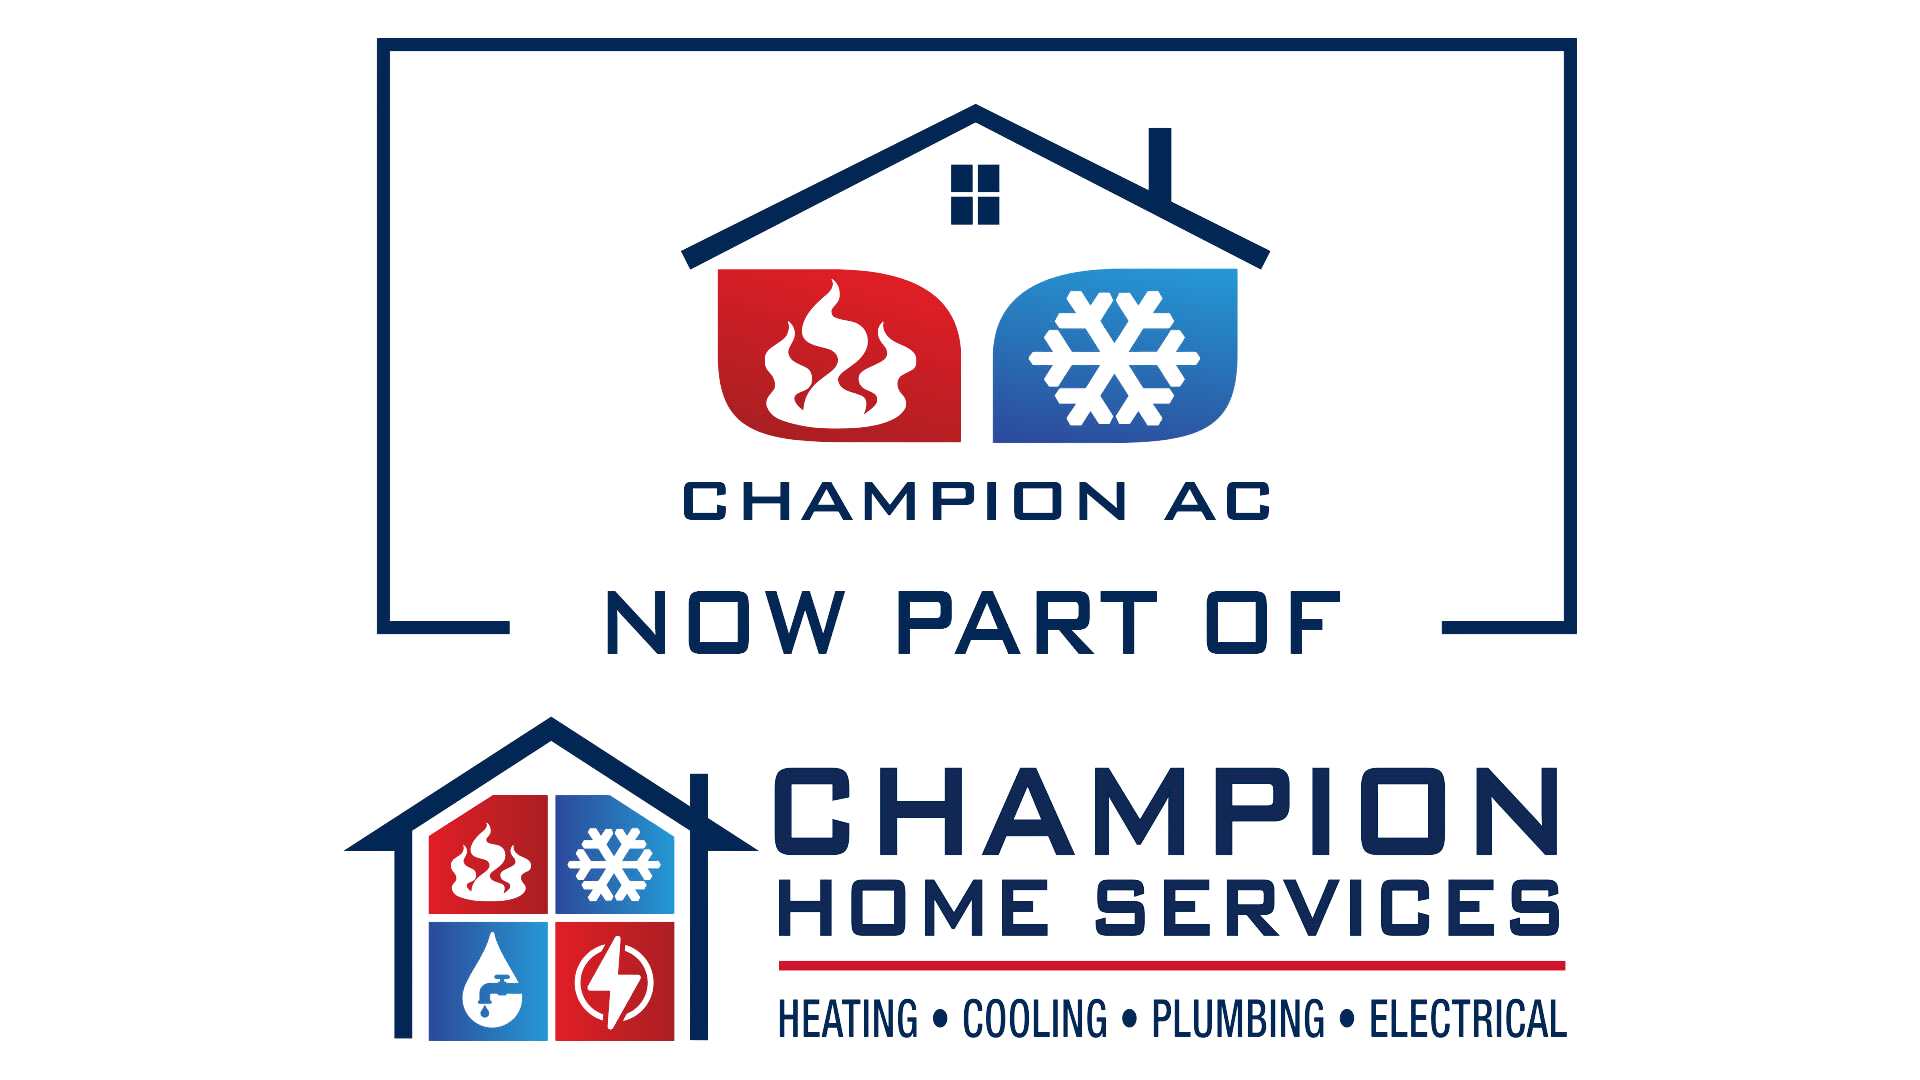 Champion AC logo